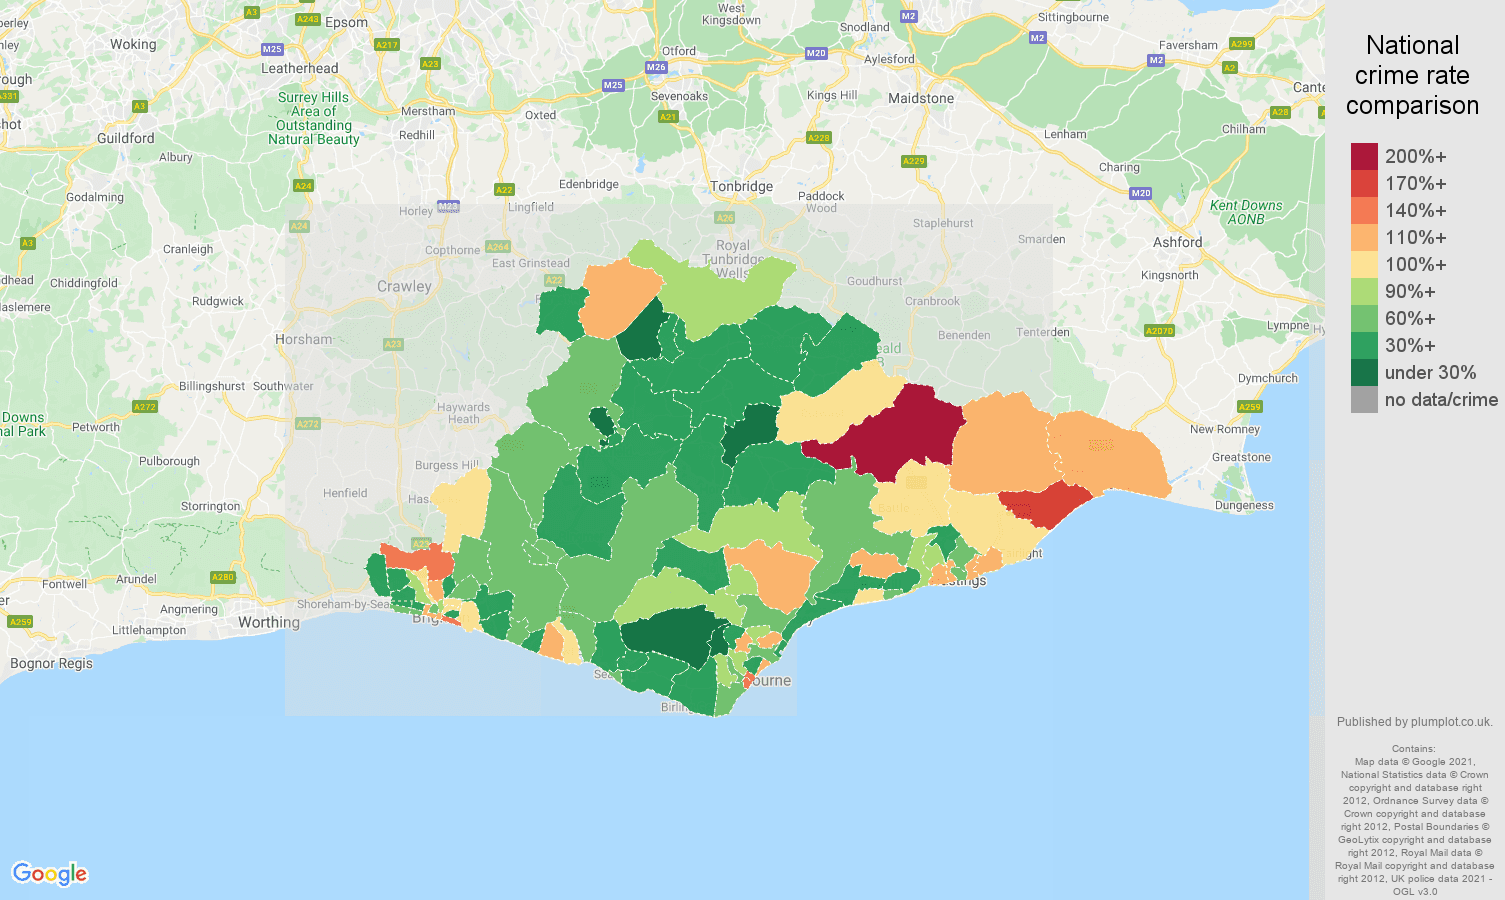 East Sussex burglary crime rate comparison map